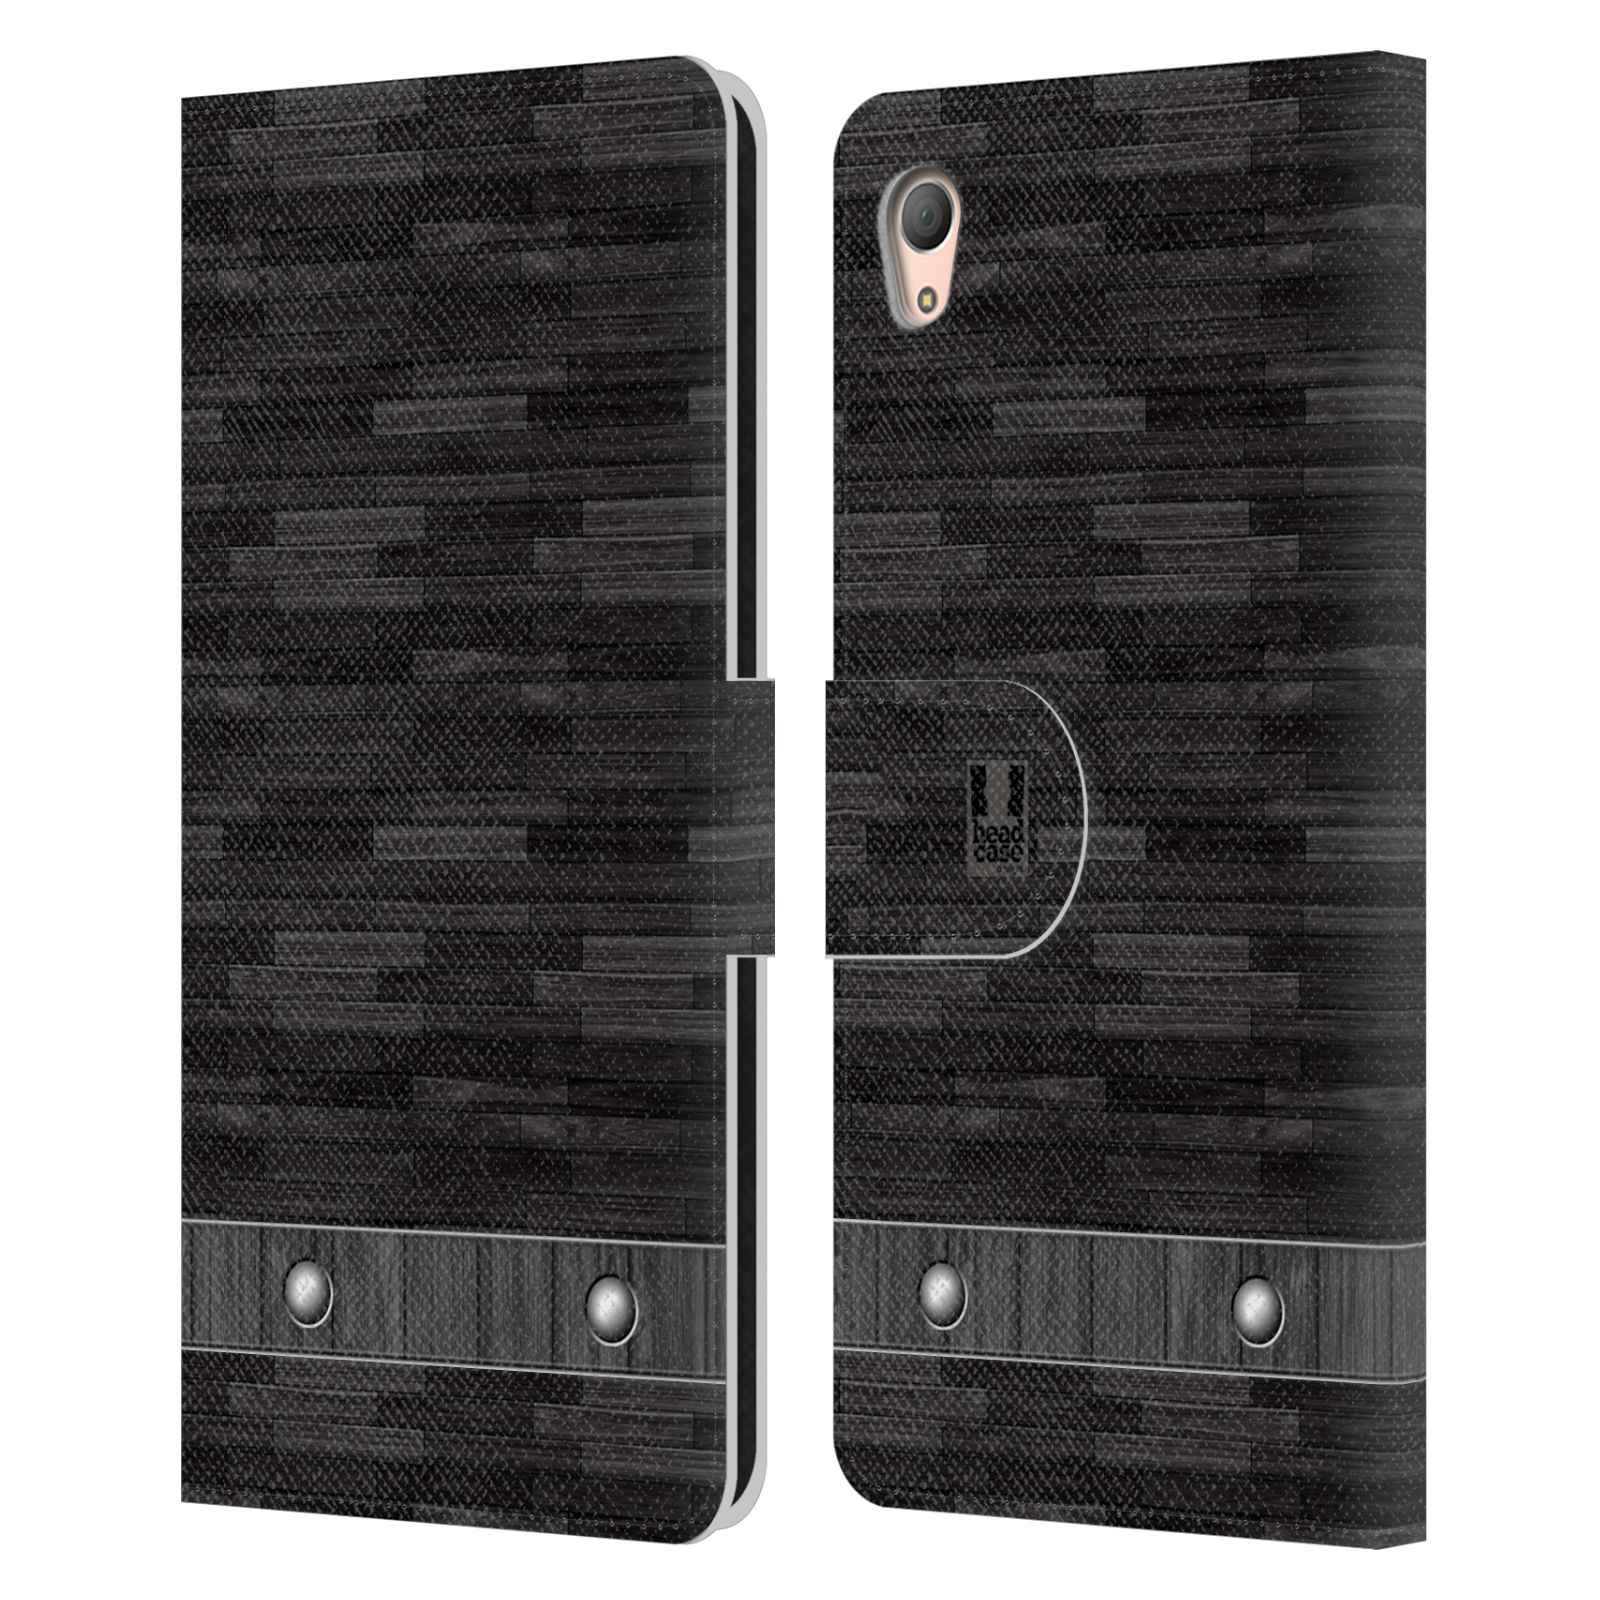 HEAD CASE Flipové pouzdro pro mobil SONY XPERIA Z3+ (PLUS) stavební textury dřevo černá barva